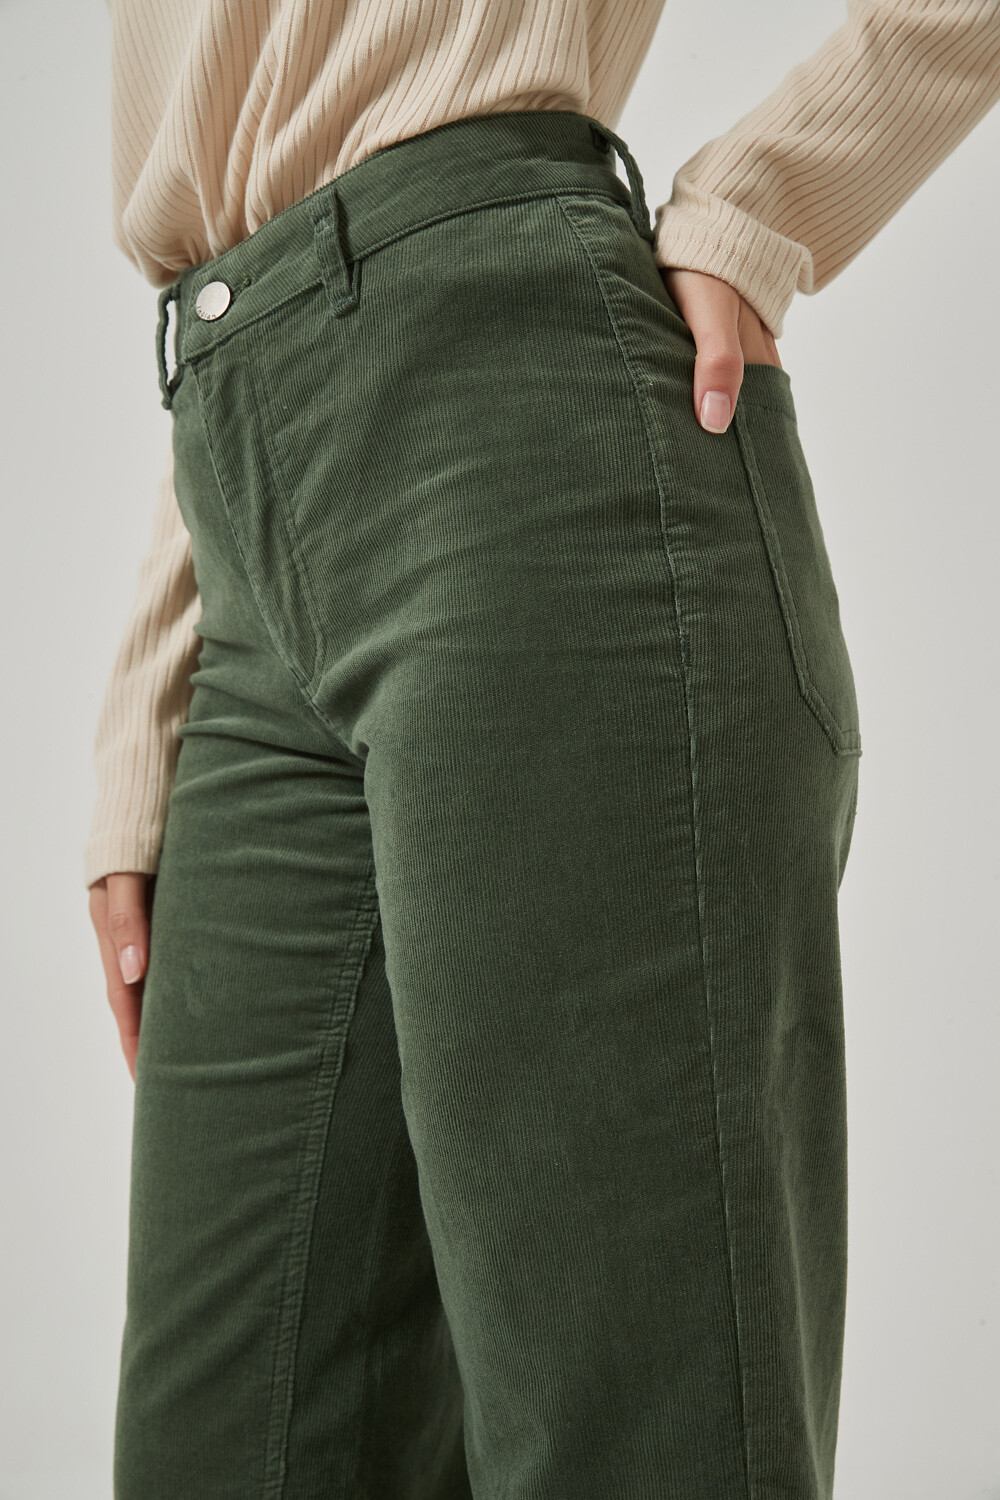 Pantalon Huch Verde Militar